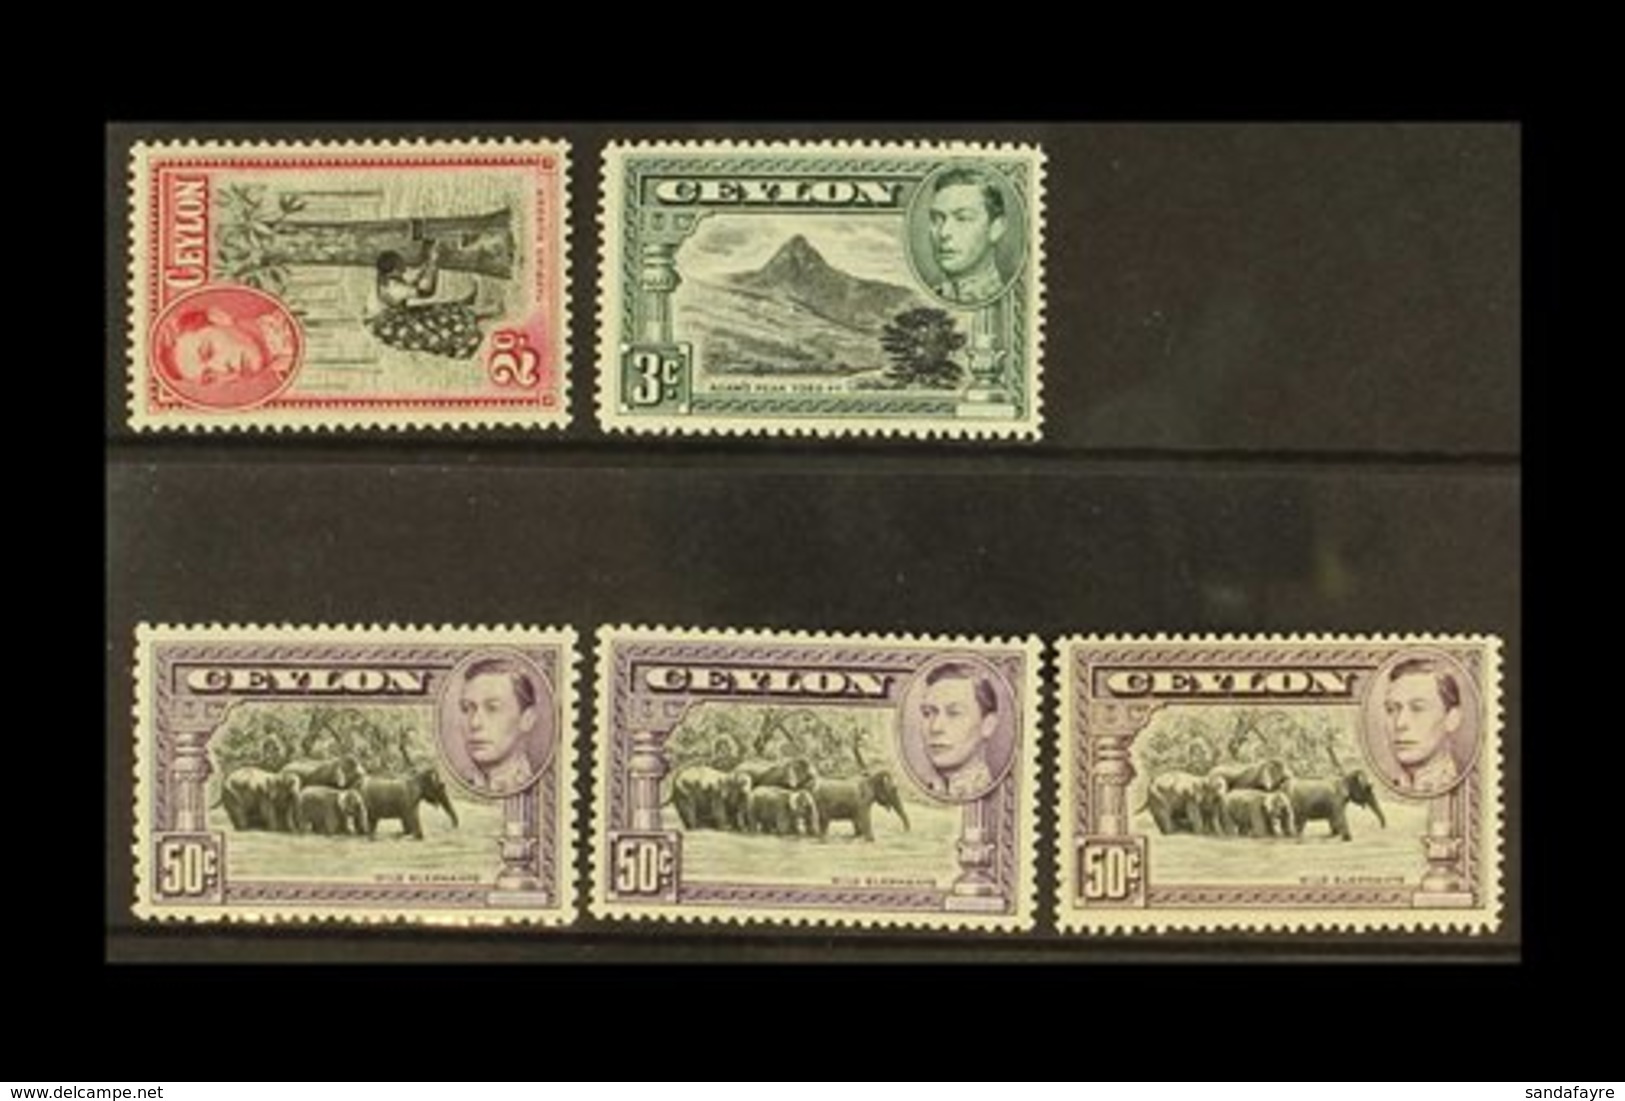 1938-49 Scarce Perfs, With 2c SG 386a, 3c SG 387c, 50c SG 394, 394a And 395c, Lightly Hinged Mint, Cat £990. (5 Stamps) - Ceylon (...-1947)